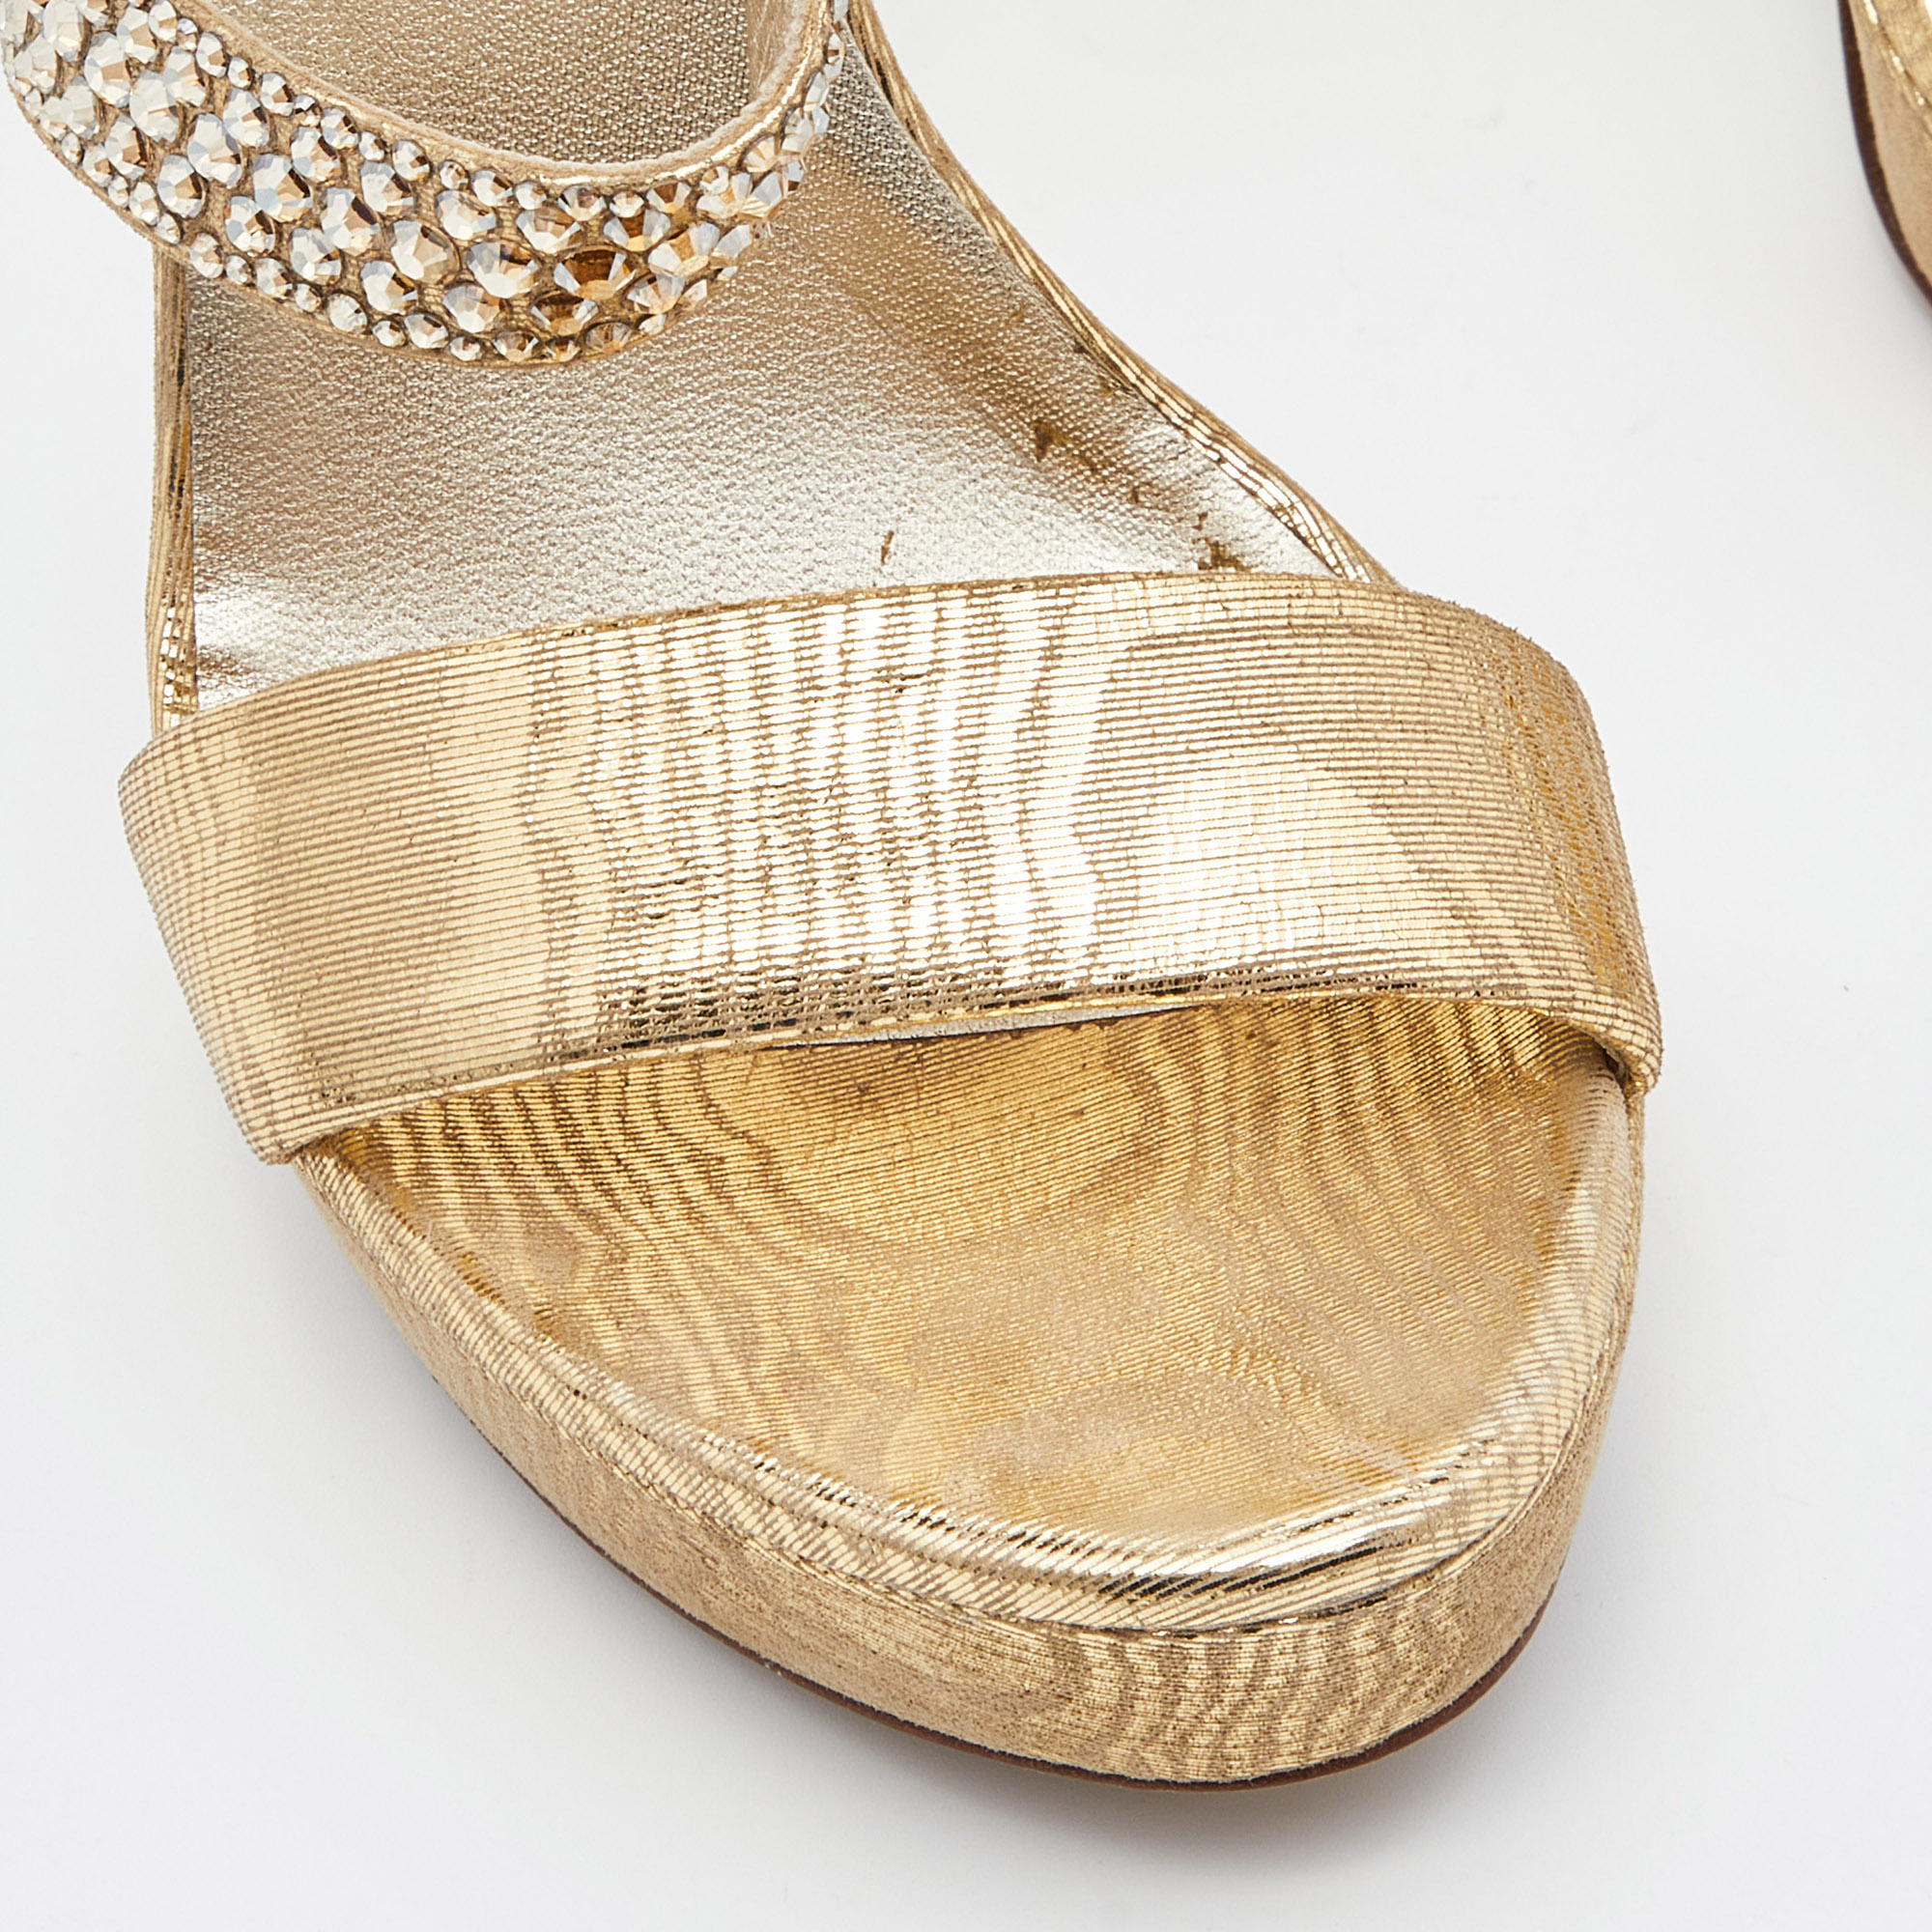 Loriblu Gold Lurex Fabric Crystal Embellished Open Toe Platform Sandals Size 36.5